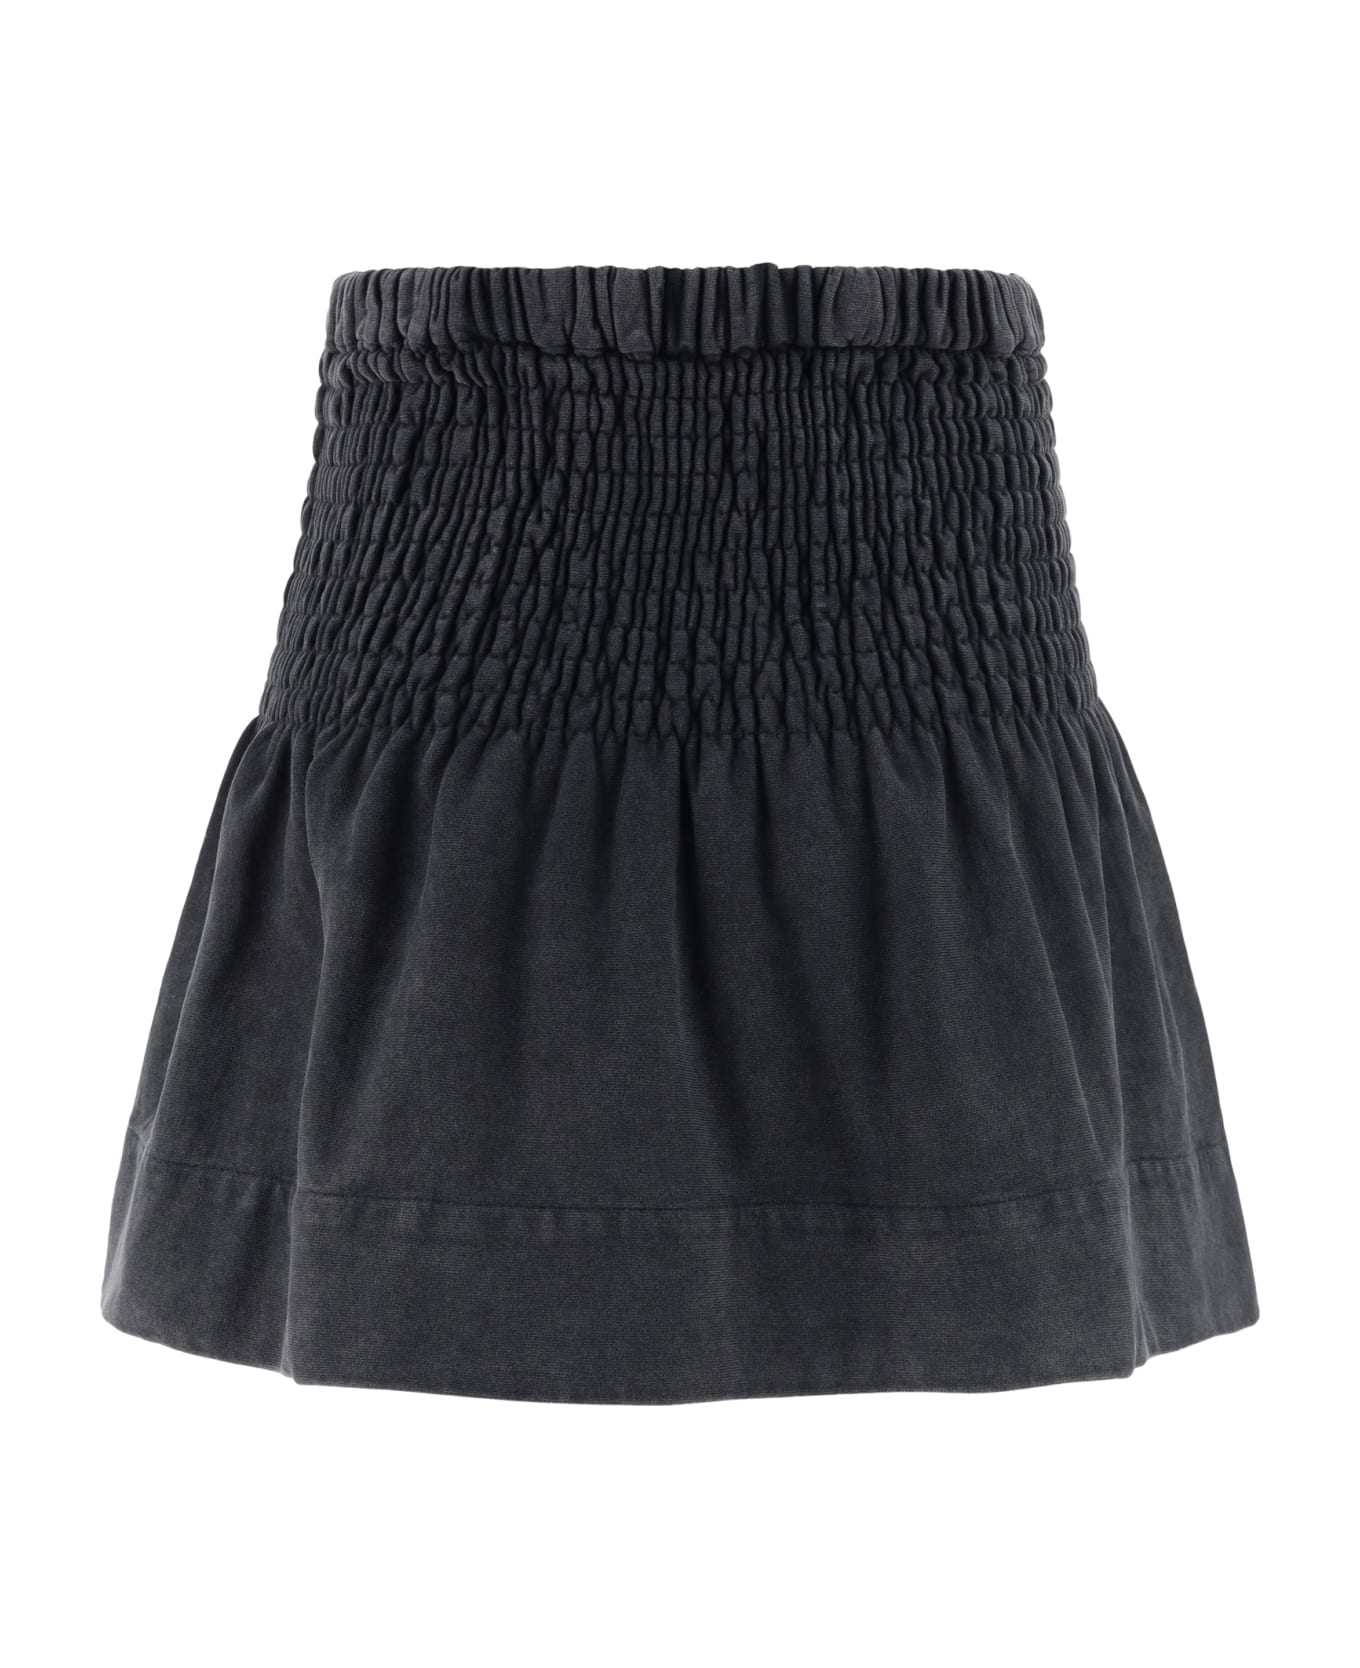 Marant Étoile Pacifica Mini Skirt - Faded Black スカート